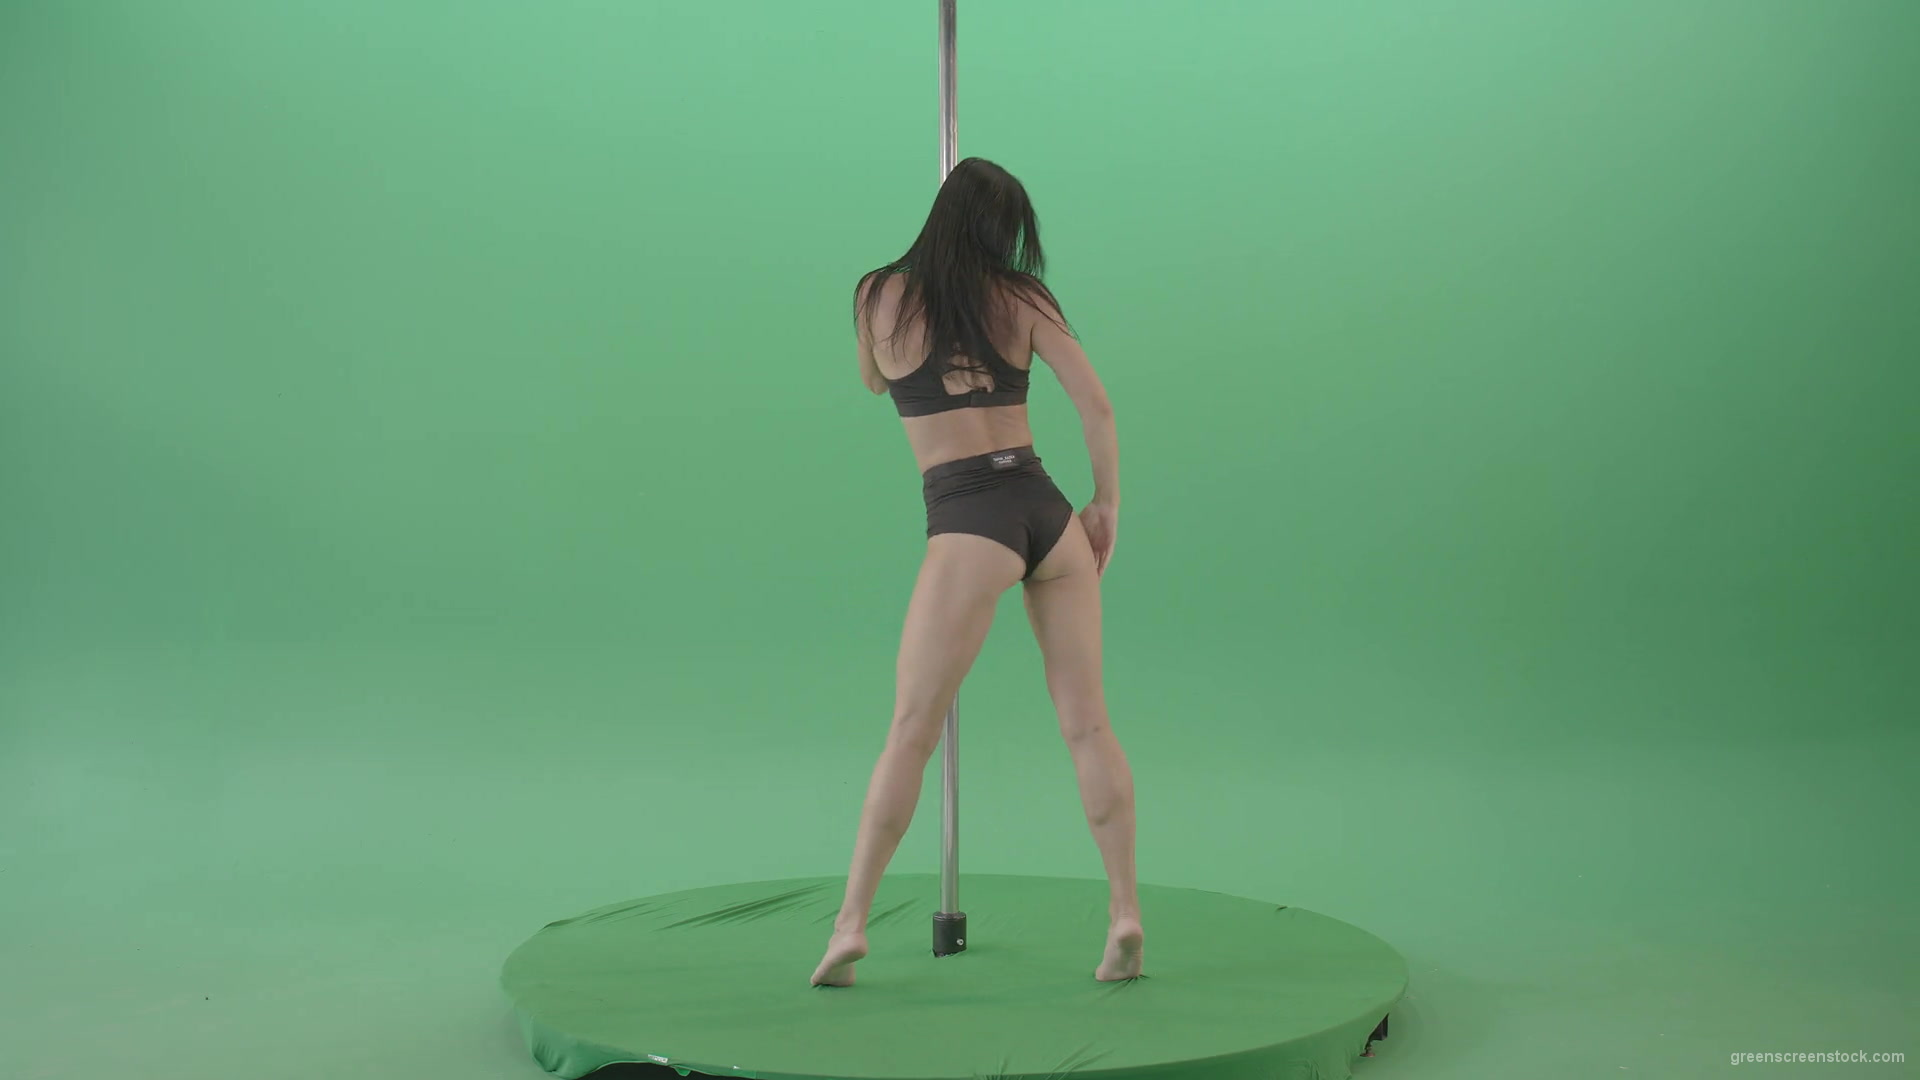 Brunette-Strip-Model-Girl-has-fun-on-dancing-pole-isolated-on-Green-Screen-4K-Video-Footage-1920_005 Green Screen Stock